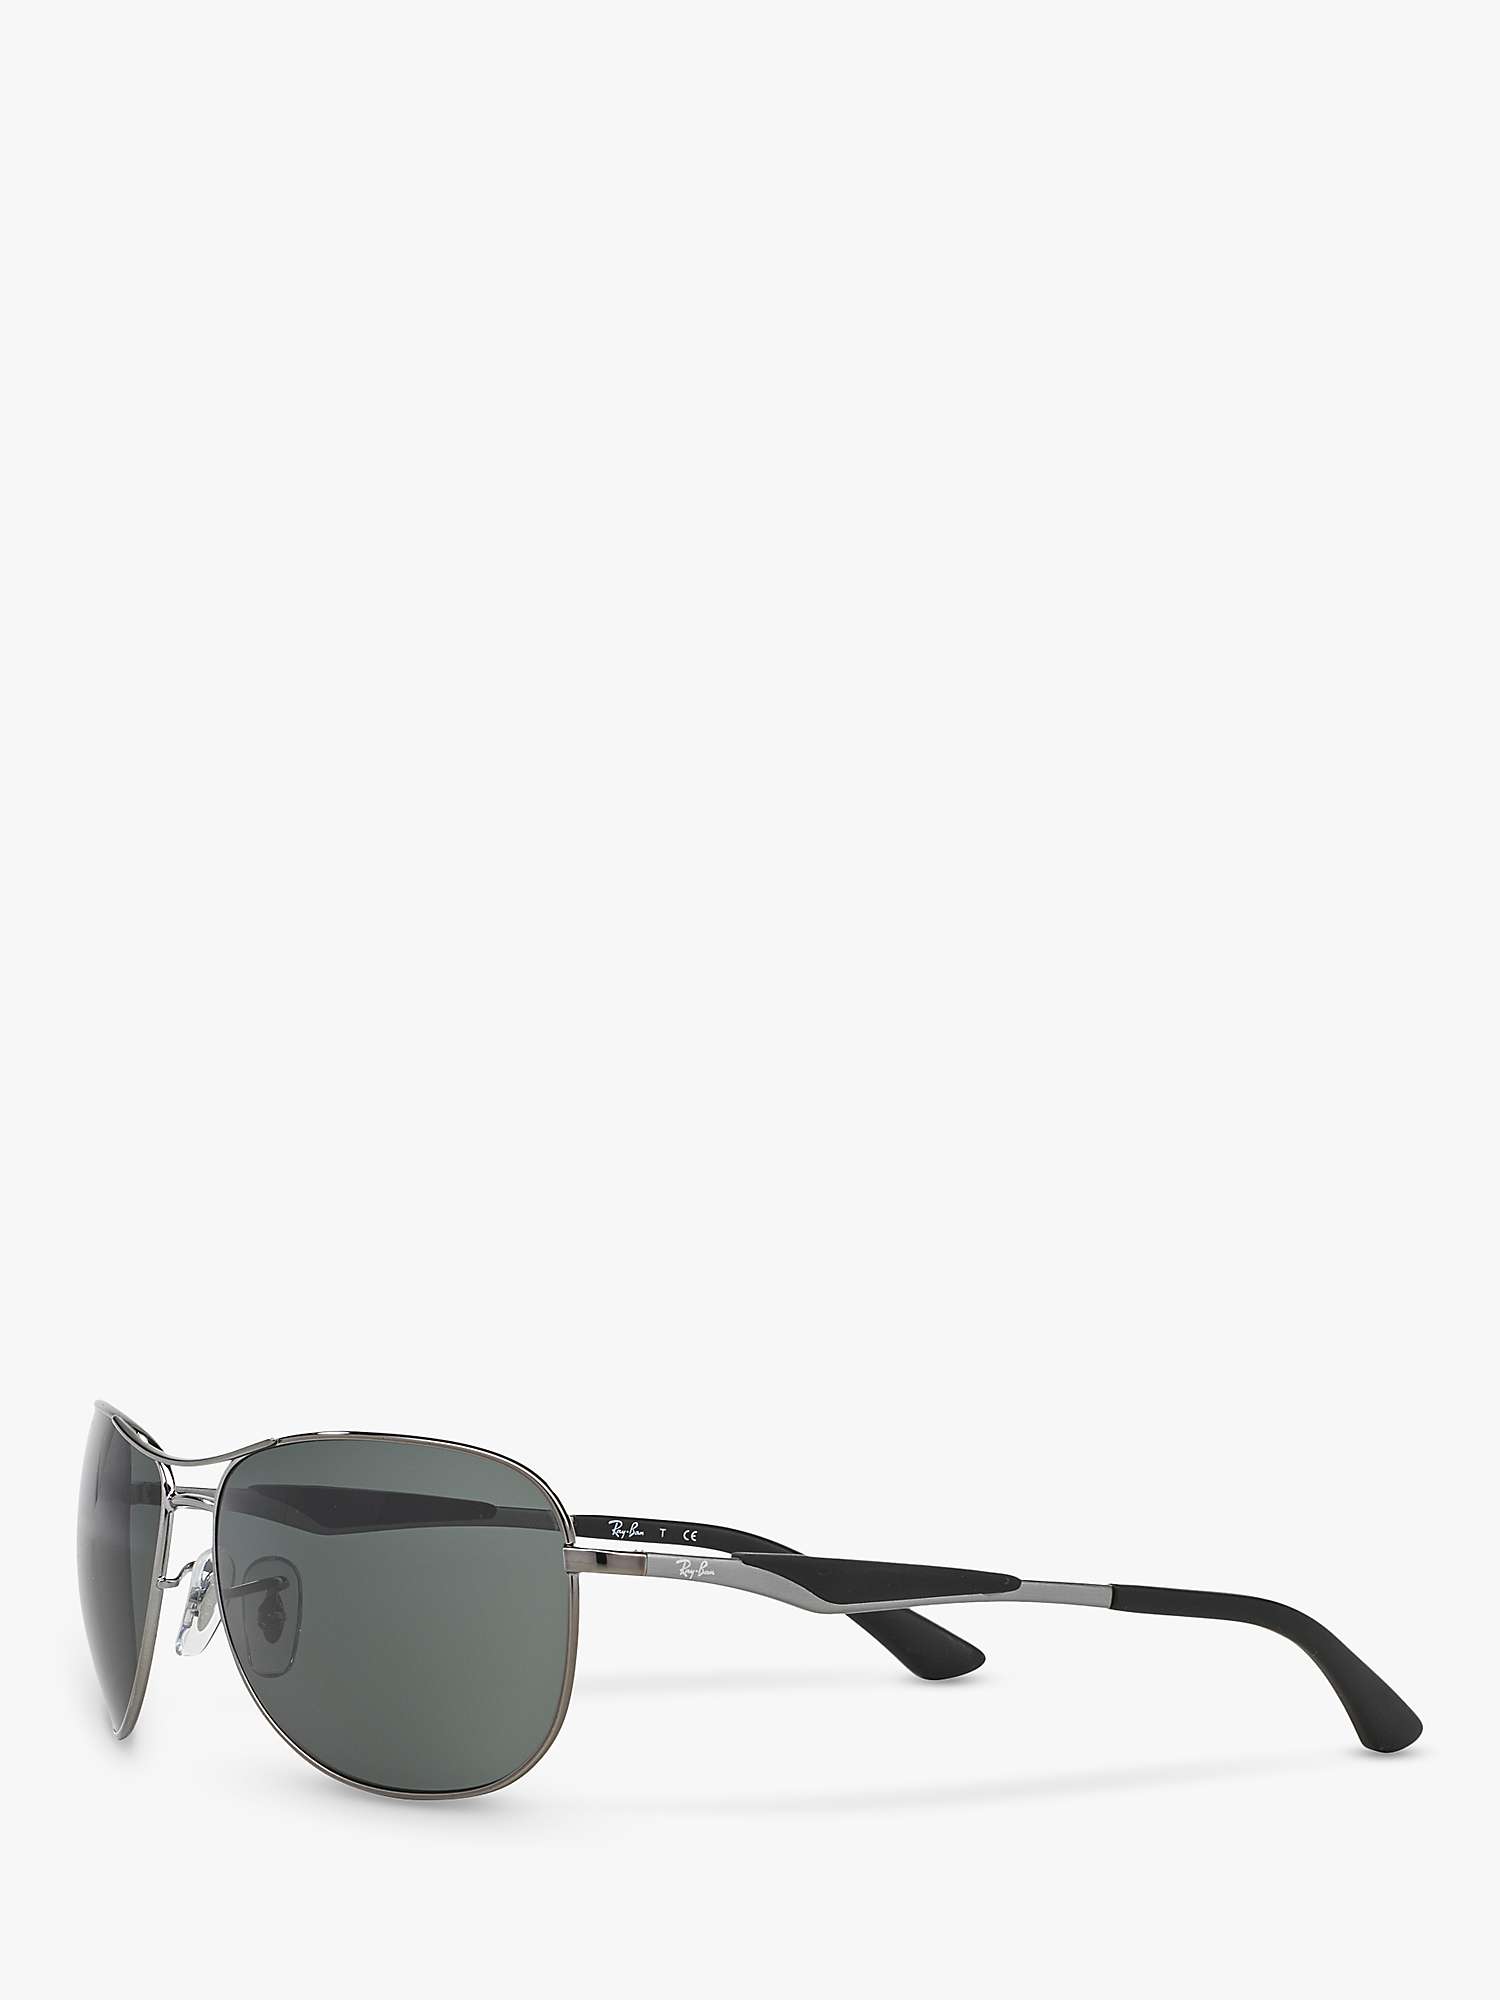 Buy Ray-Ban RB3519 59 Men's Aviator Sunglassess, Gunmetal/Grey Online at johnlewis.com